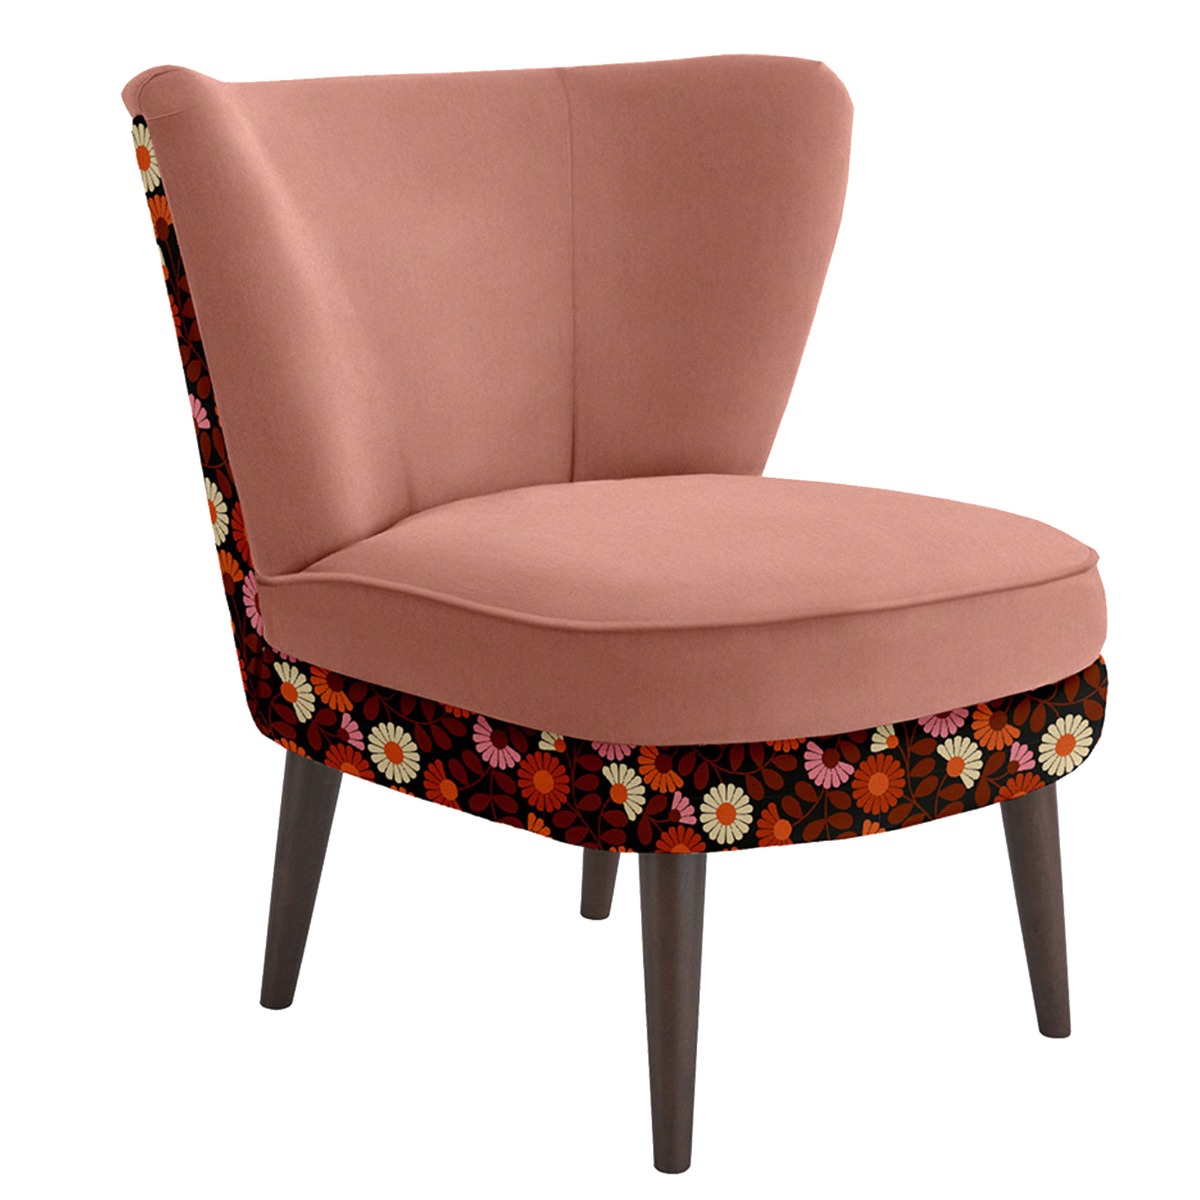 Orla Kiely Una Chair, Pink Fabric | Barker & Stonehouse